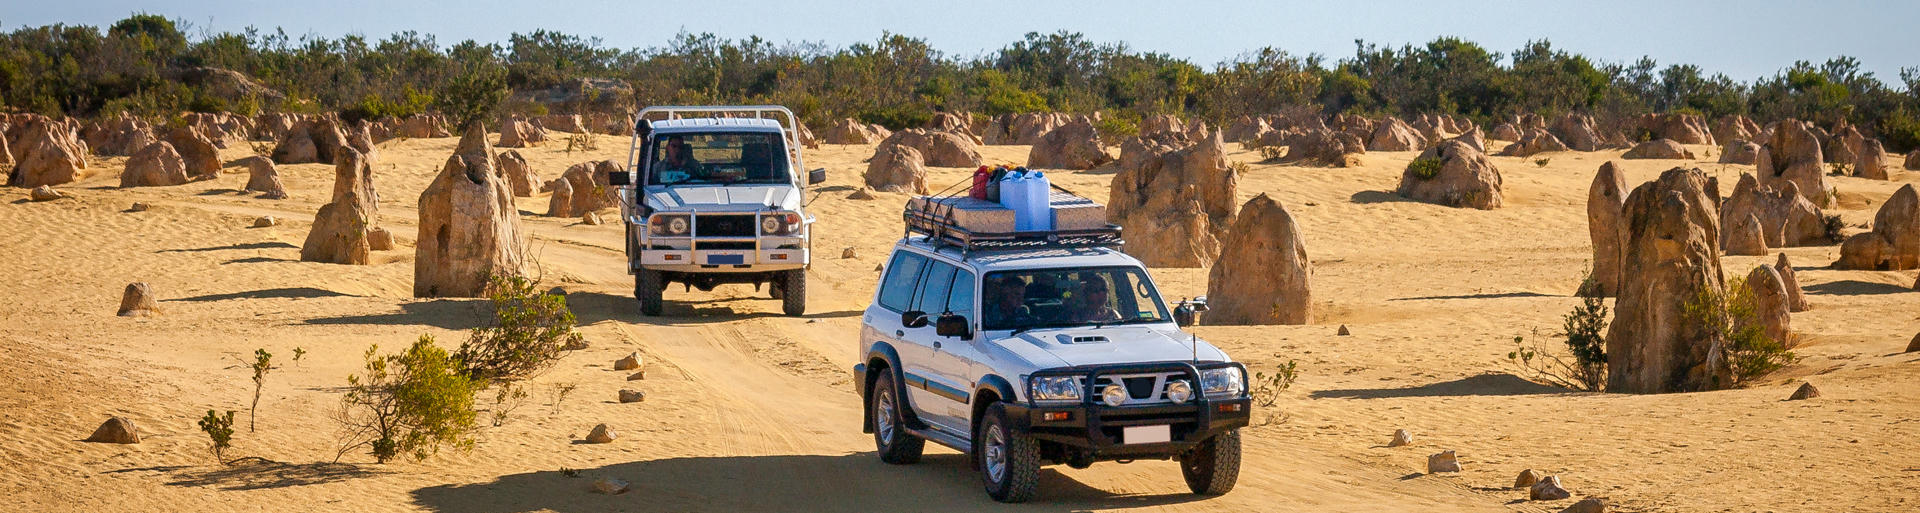 Offroad Camper fahren am Strand Australien